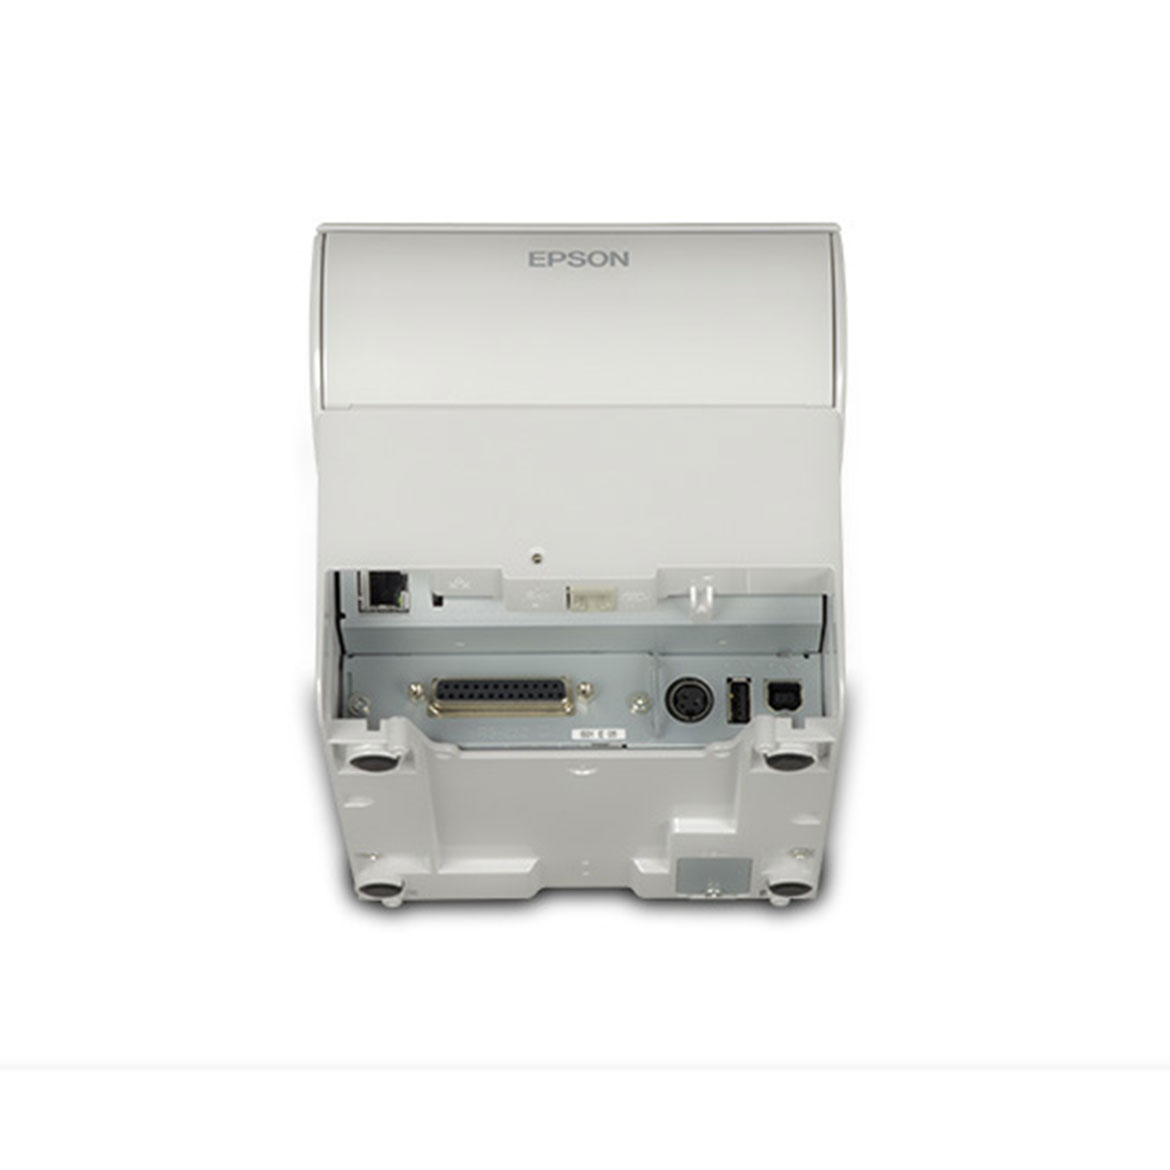 White color Epson TM-88VI Thermal receipt printer back image